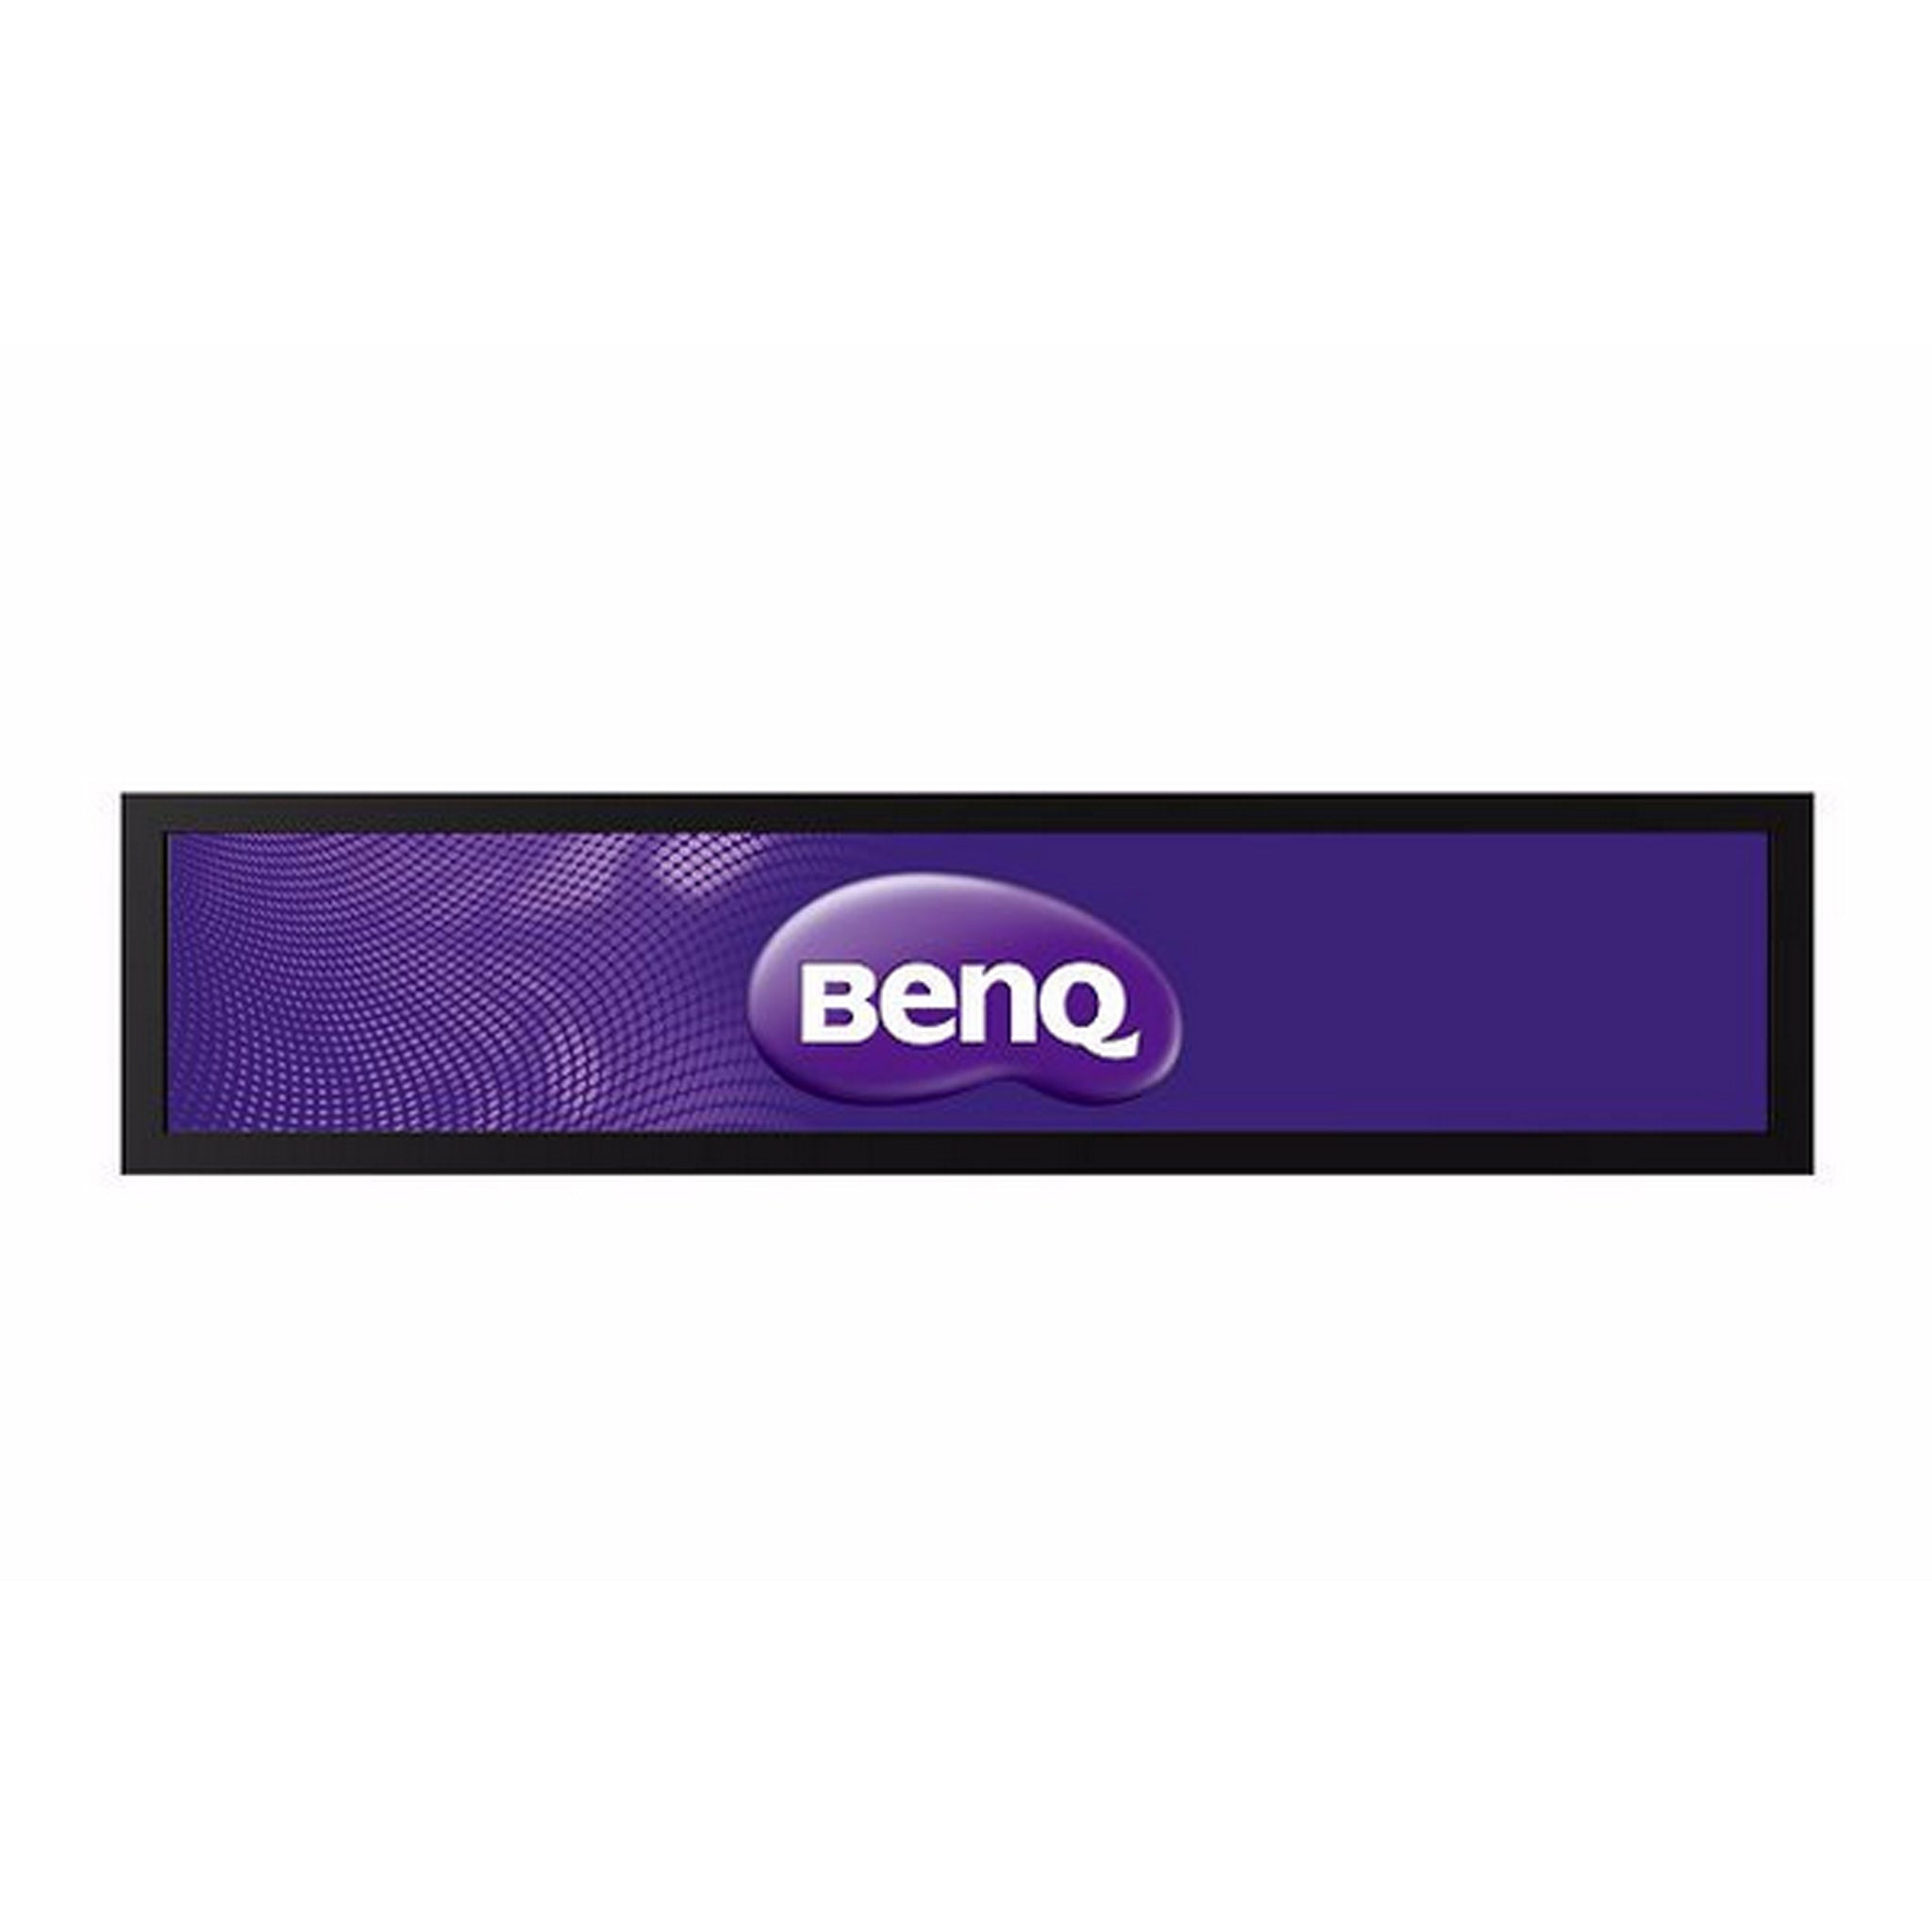 BenQ BH280 Digital Signage monitor - 28" stretched